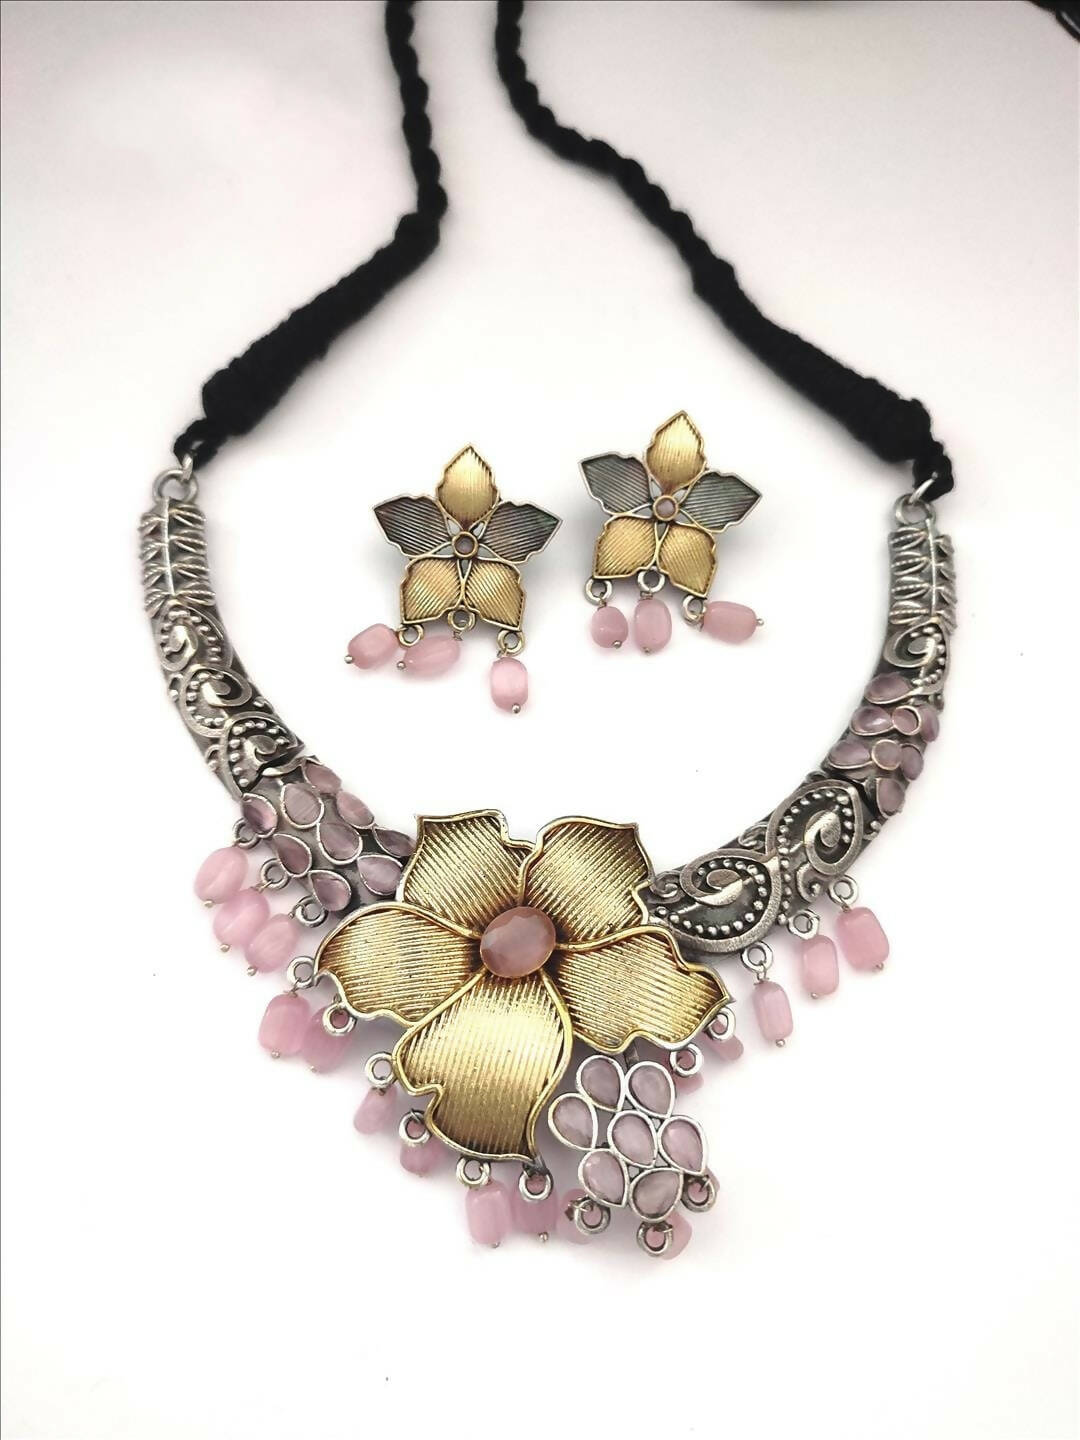 Silver necklace set